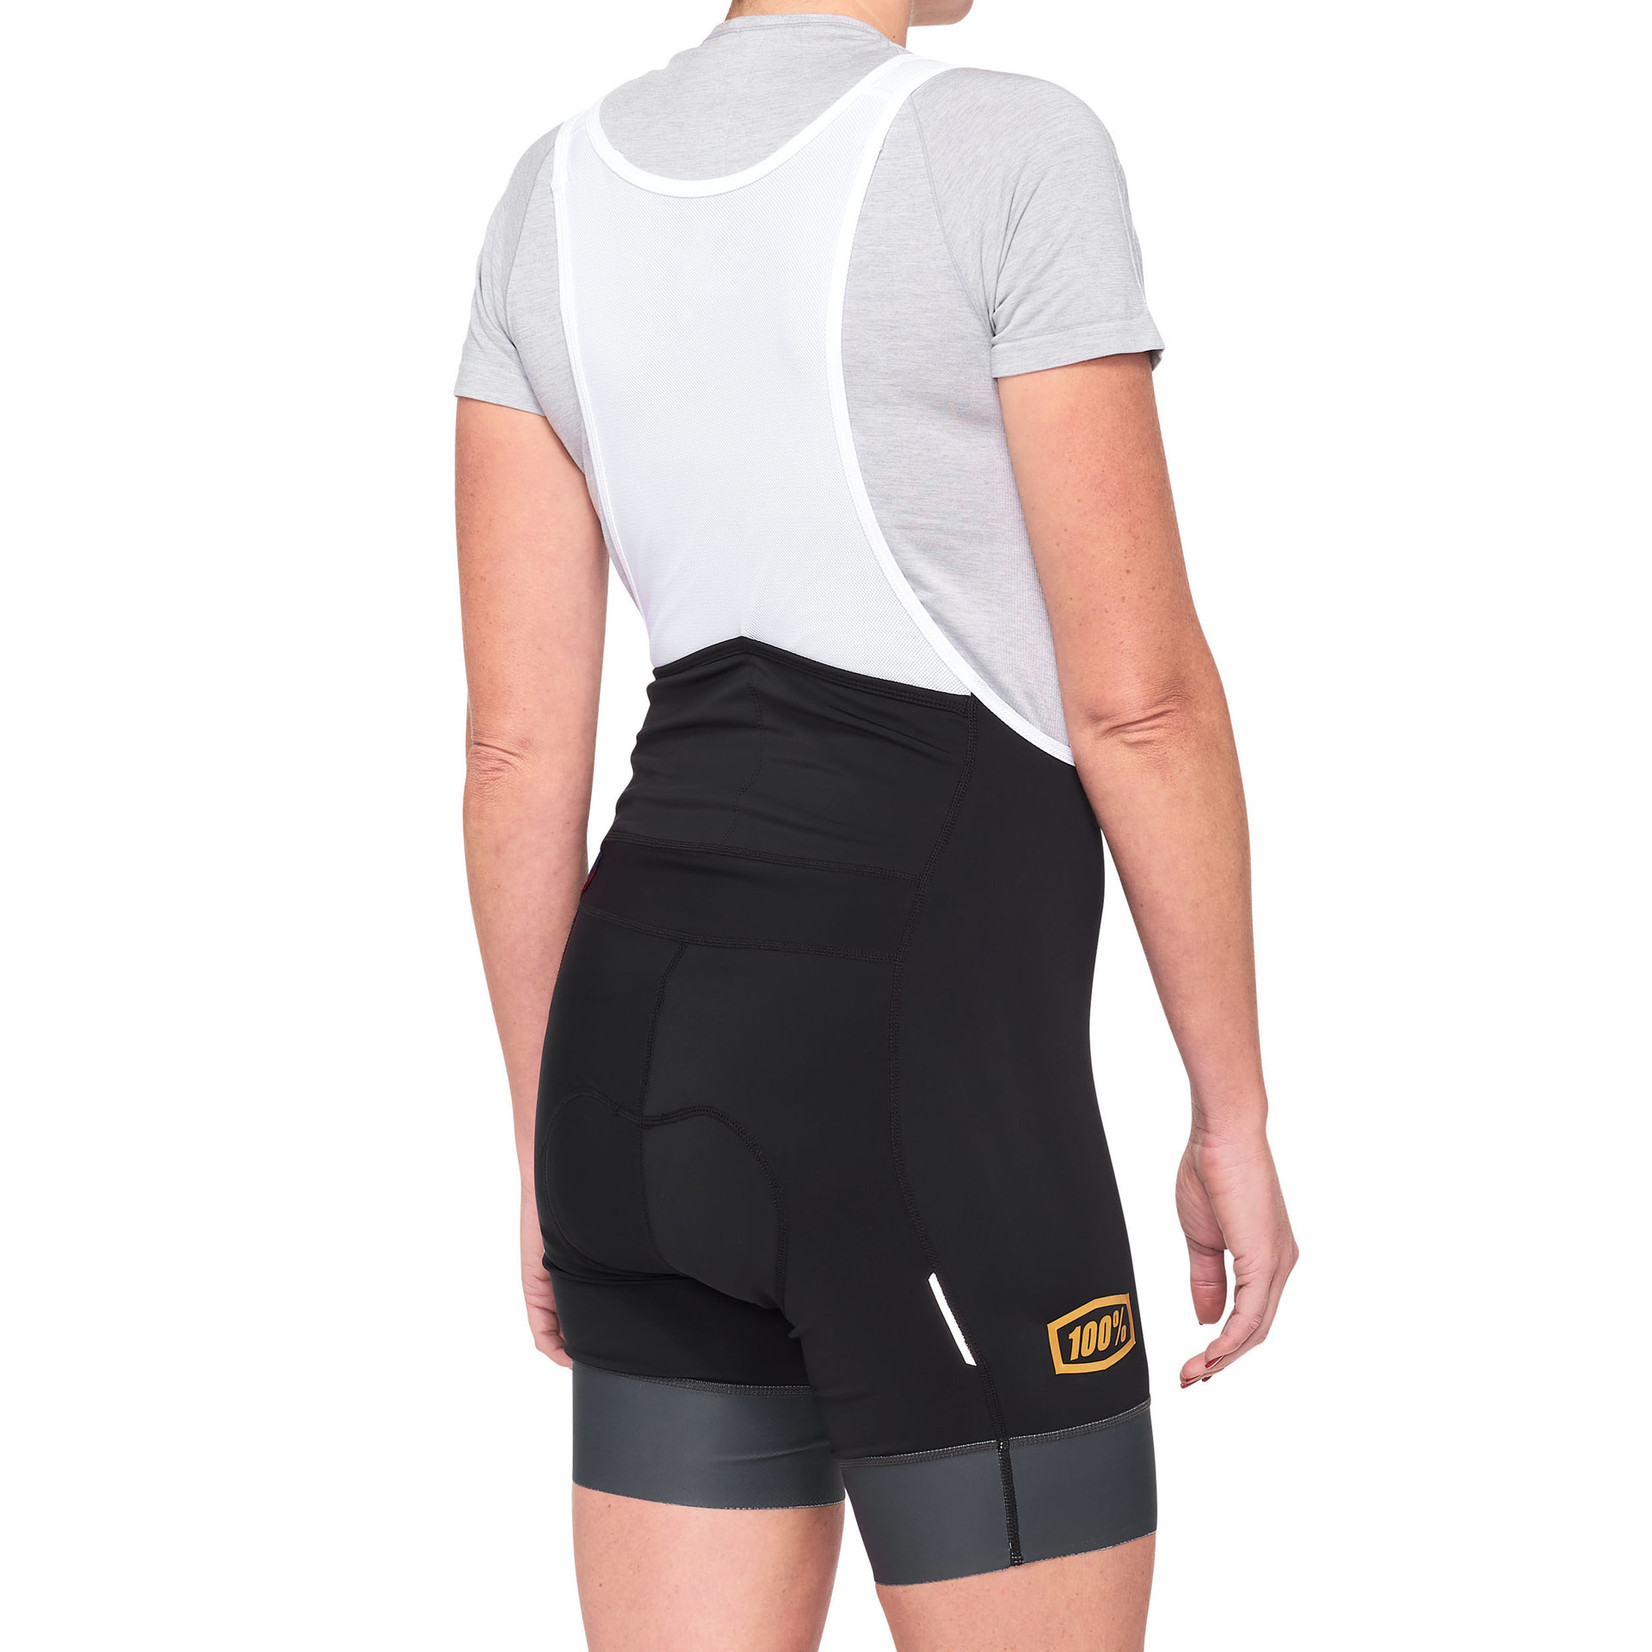 100 Percent 100% Exceeda Nylon/Spandex Women's Bib Shorts - Black/Charcoal